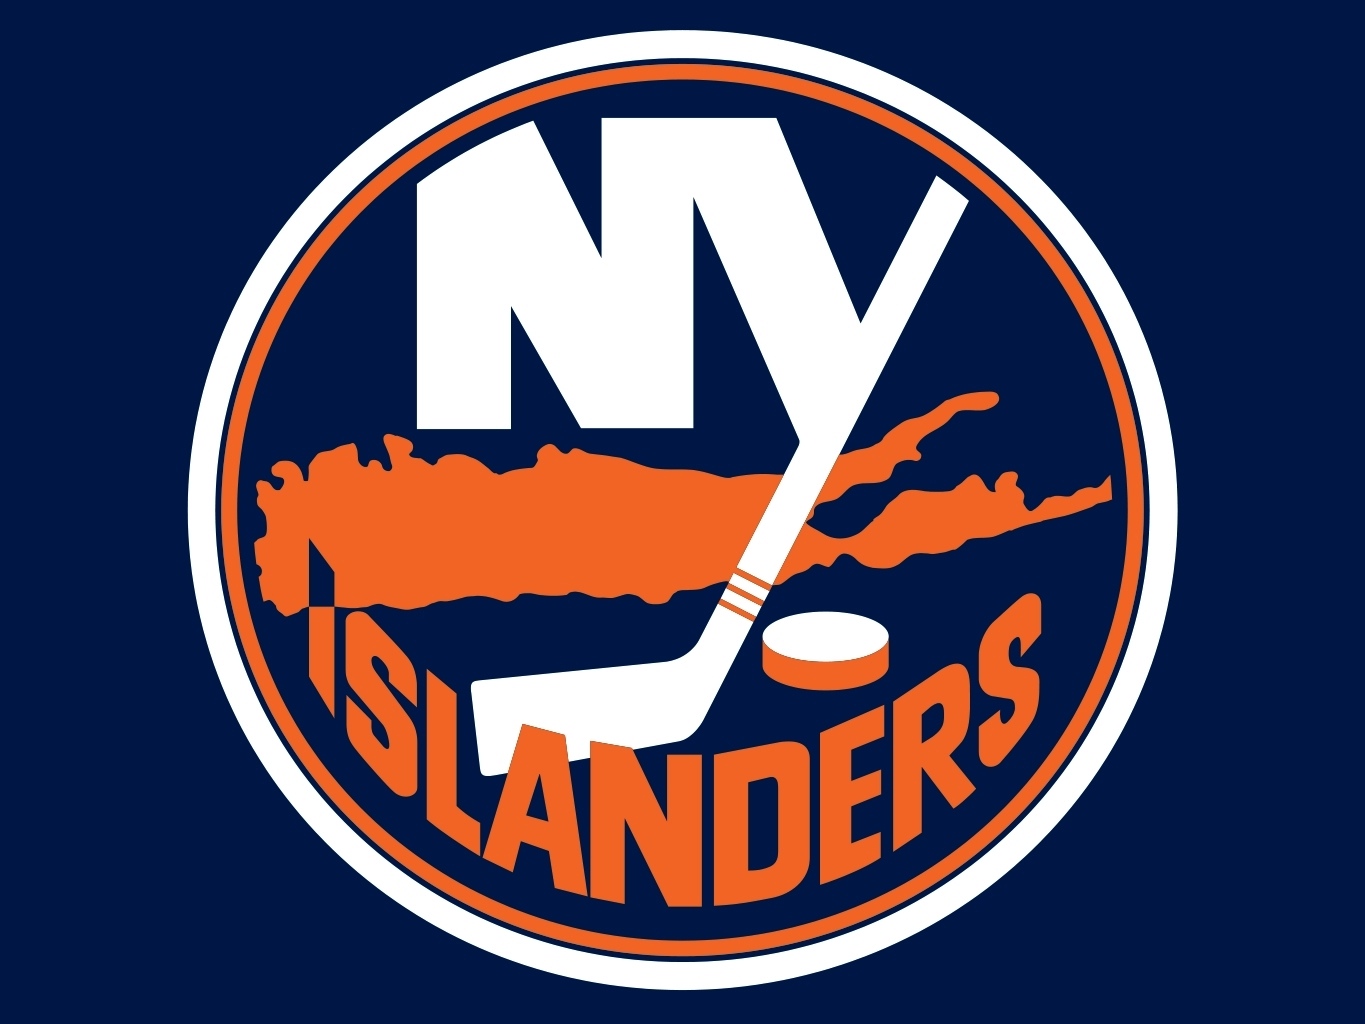 Buy New York Islanders Tickets Today